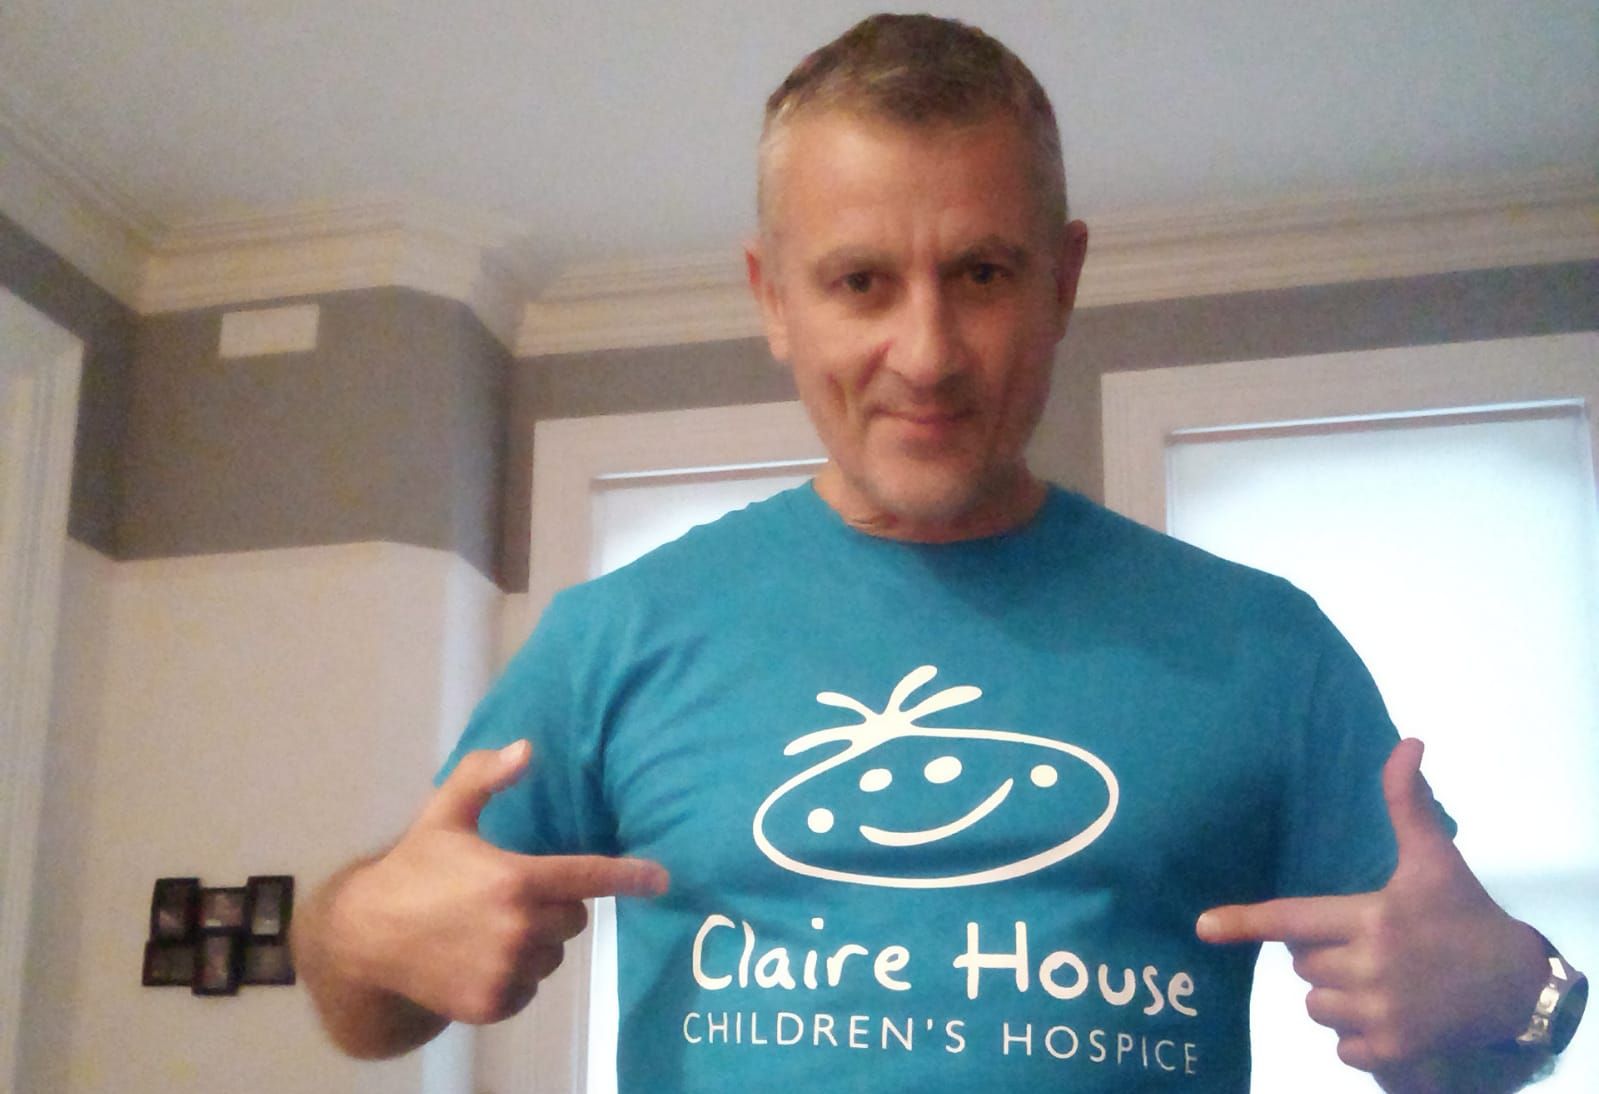 Jonny Johnstone from Southport is raising money for Claire House childrens hospice by taking on a wingwalk at Leeds East Airport in Yorkshire